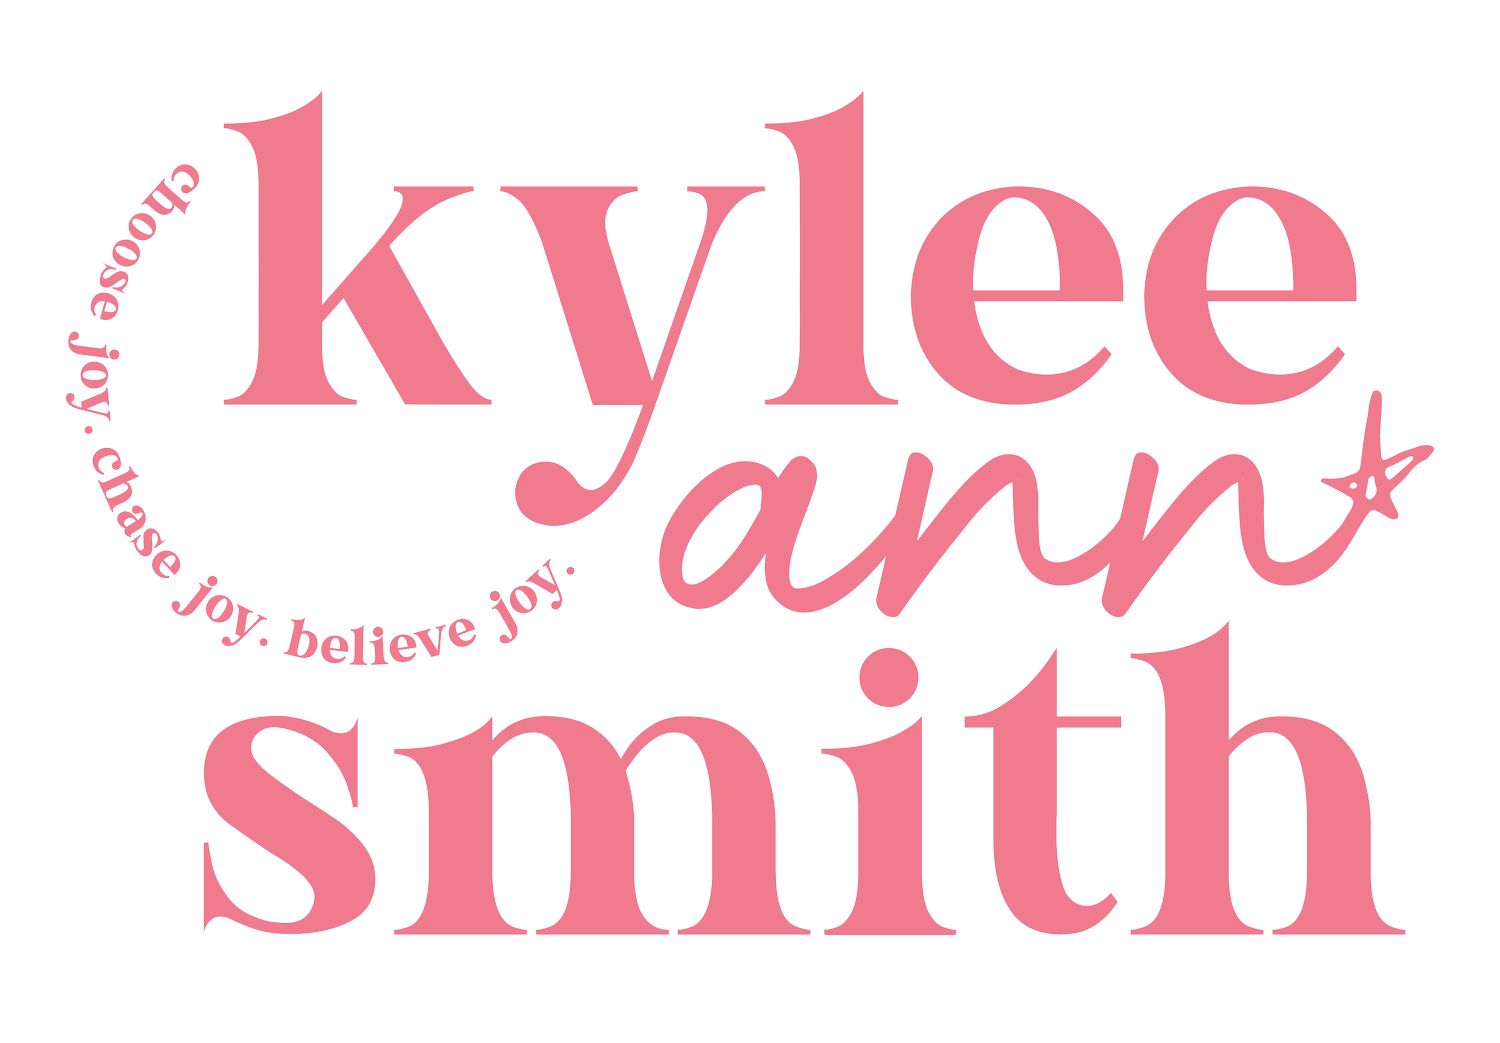 Kylee Ann Smith | Social Media Manager